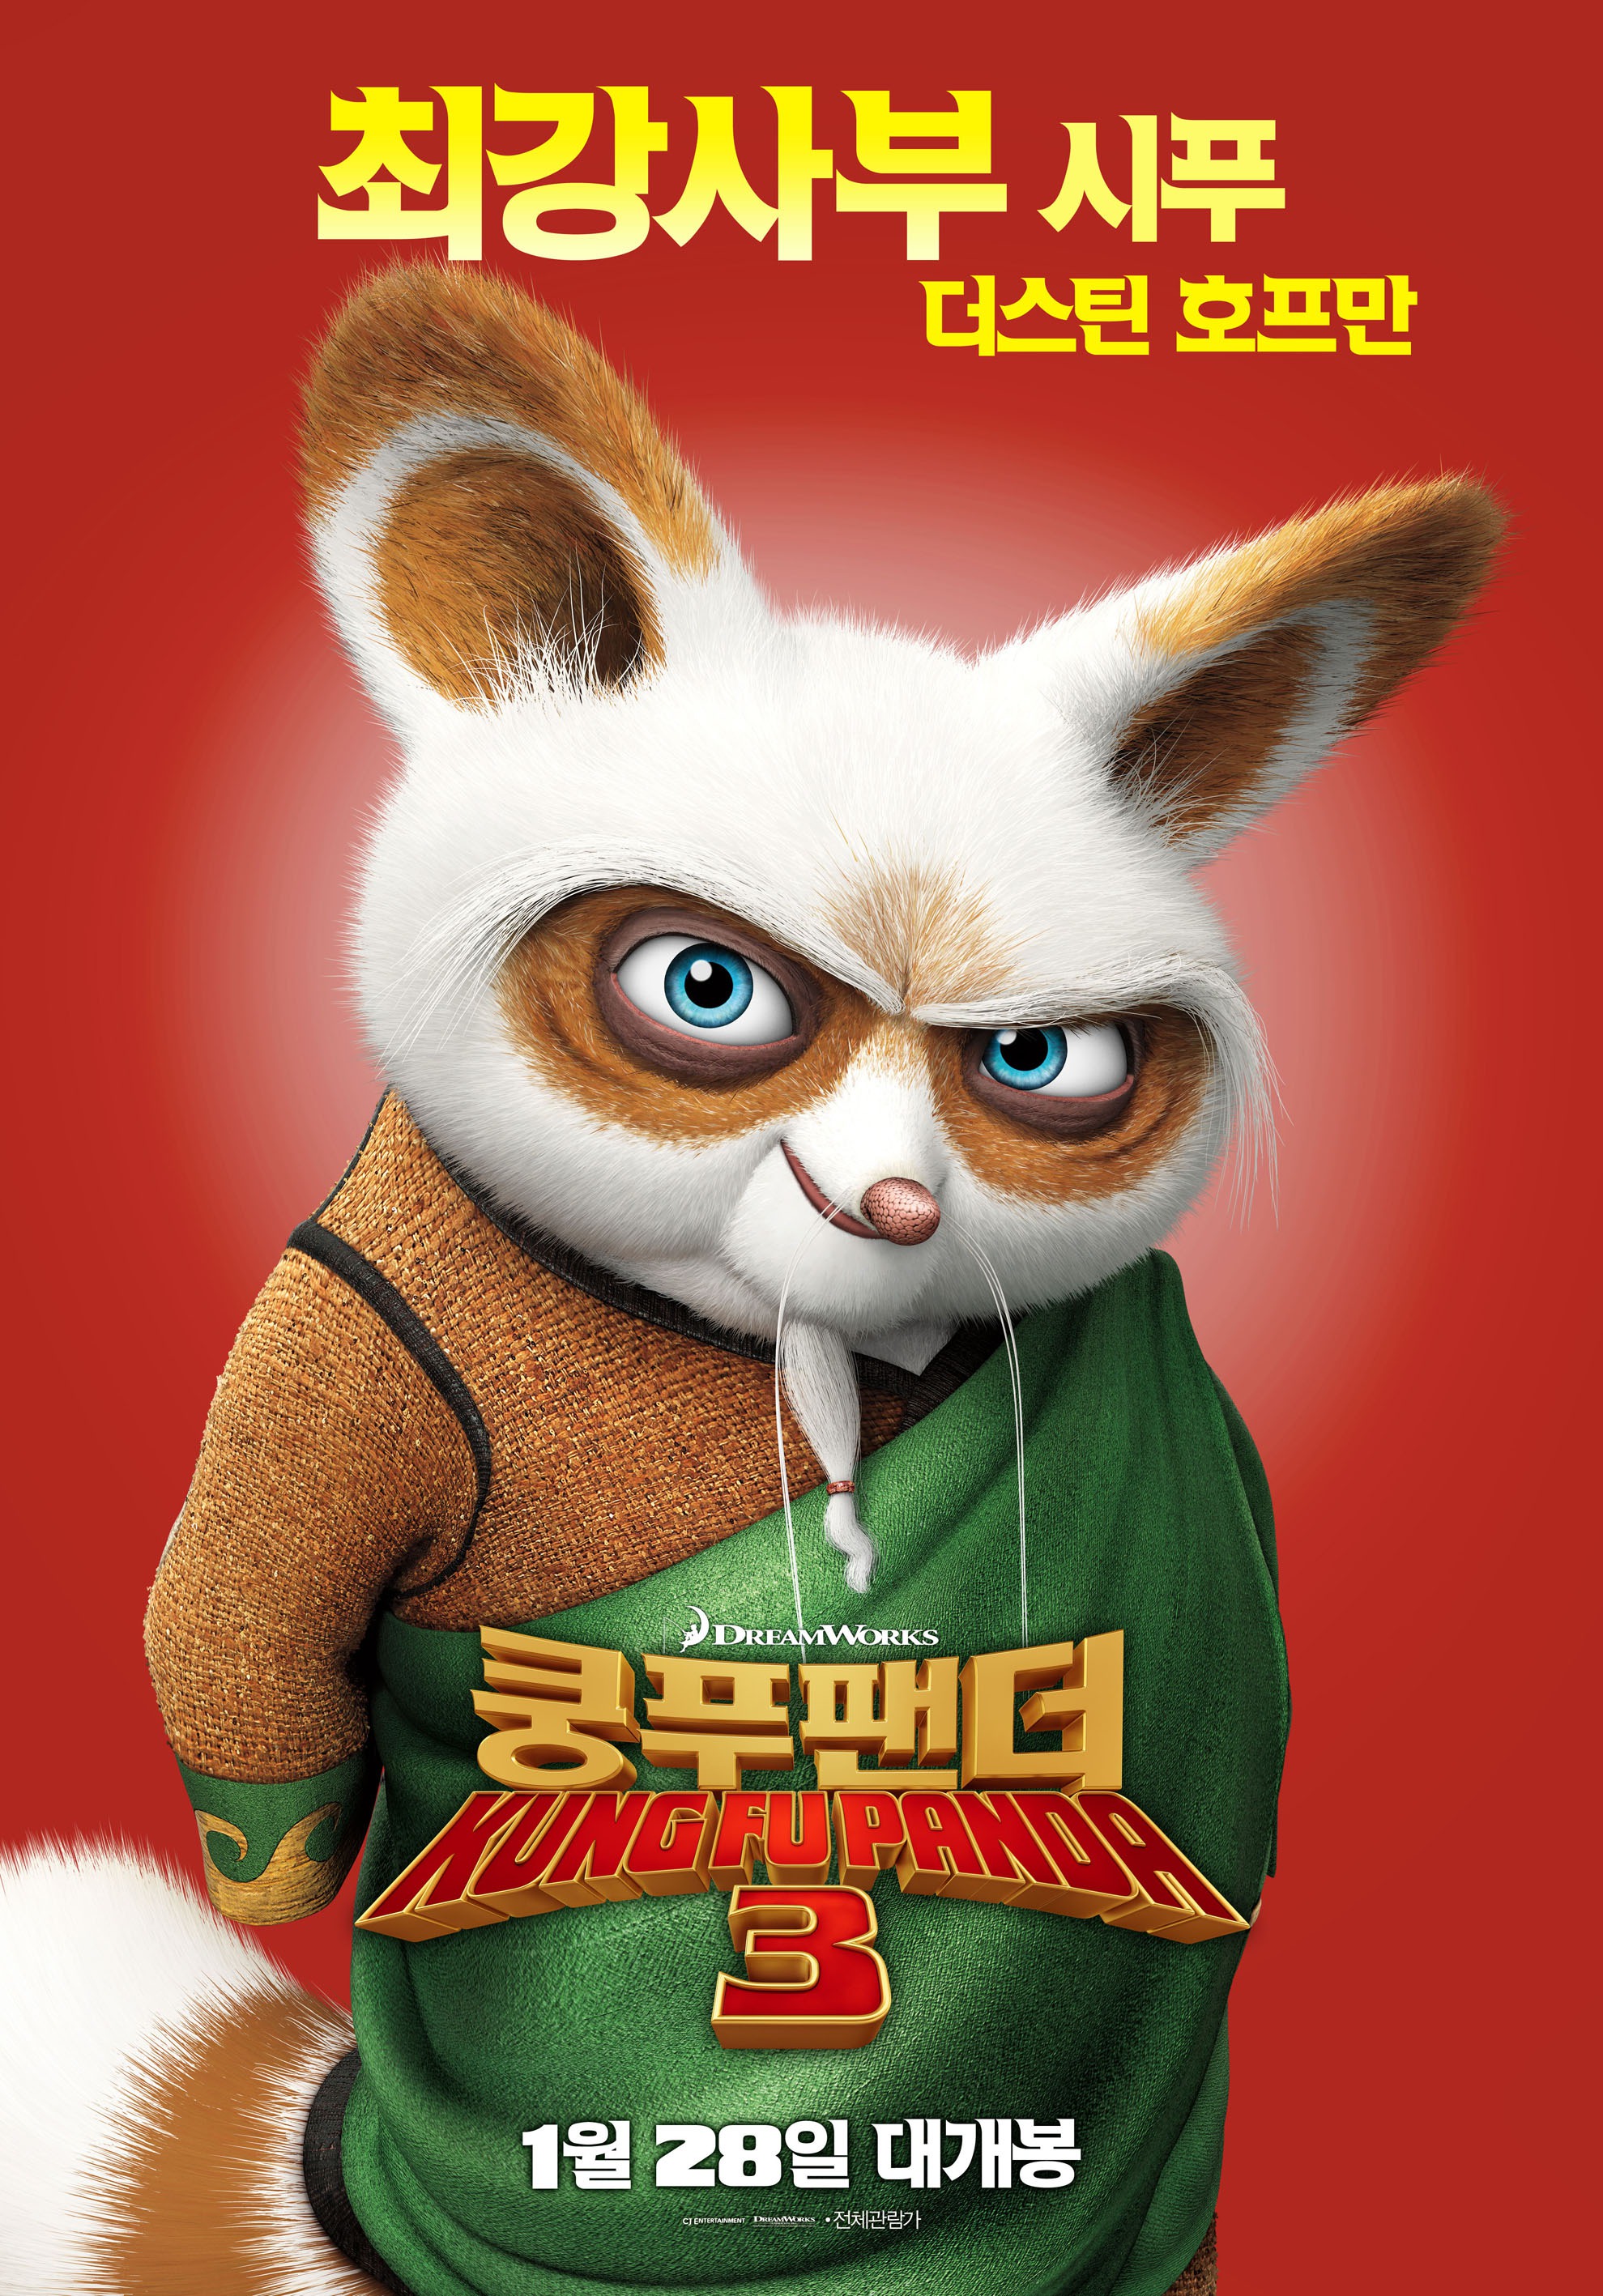 Mega Sized Movie Poster Image for Kung Fu Panda 3 (#10 of 22)